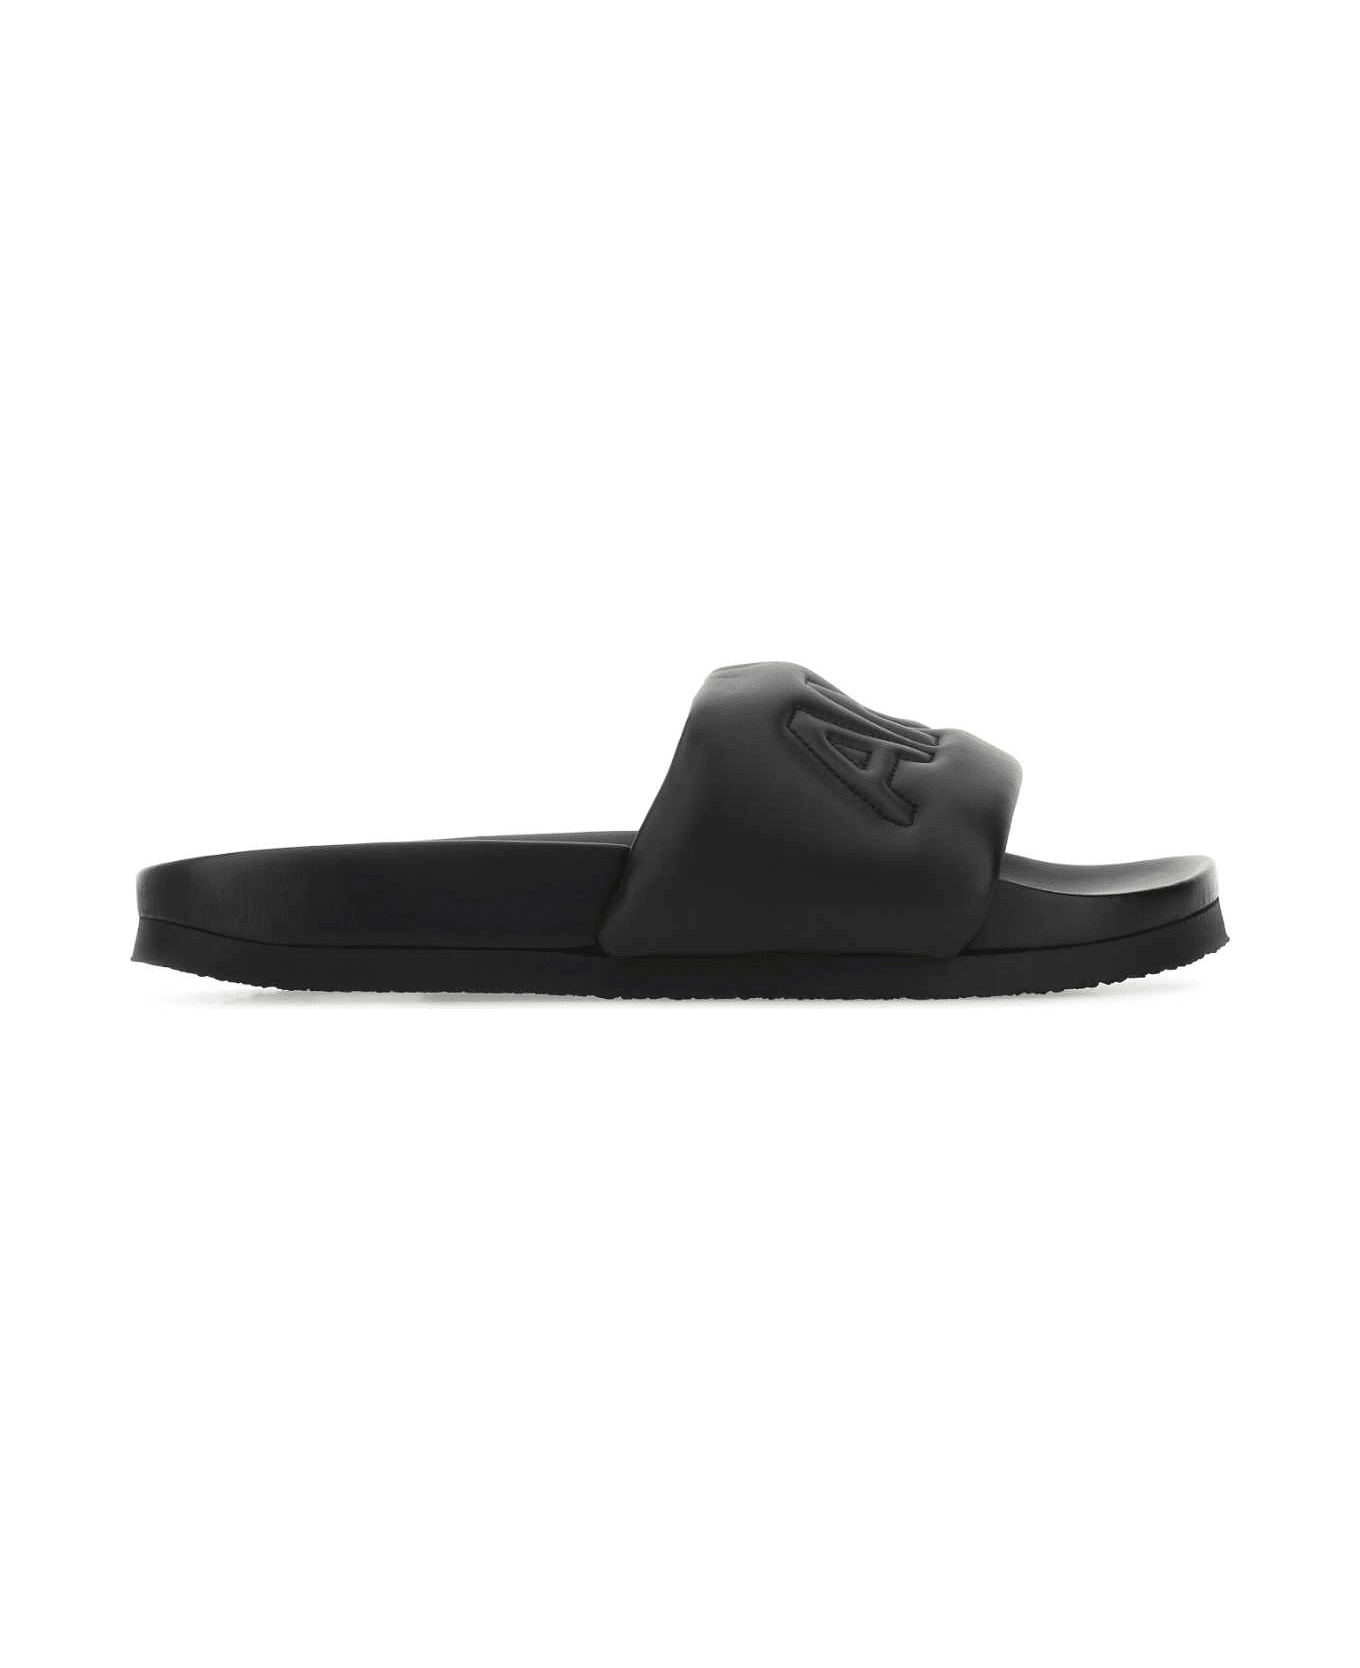 AMBUSH Black Leather Slippers - 1000